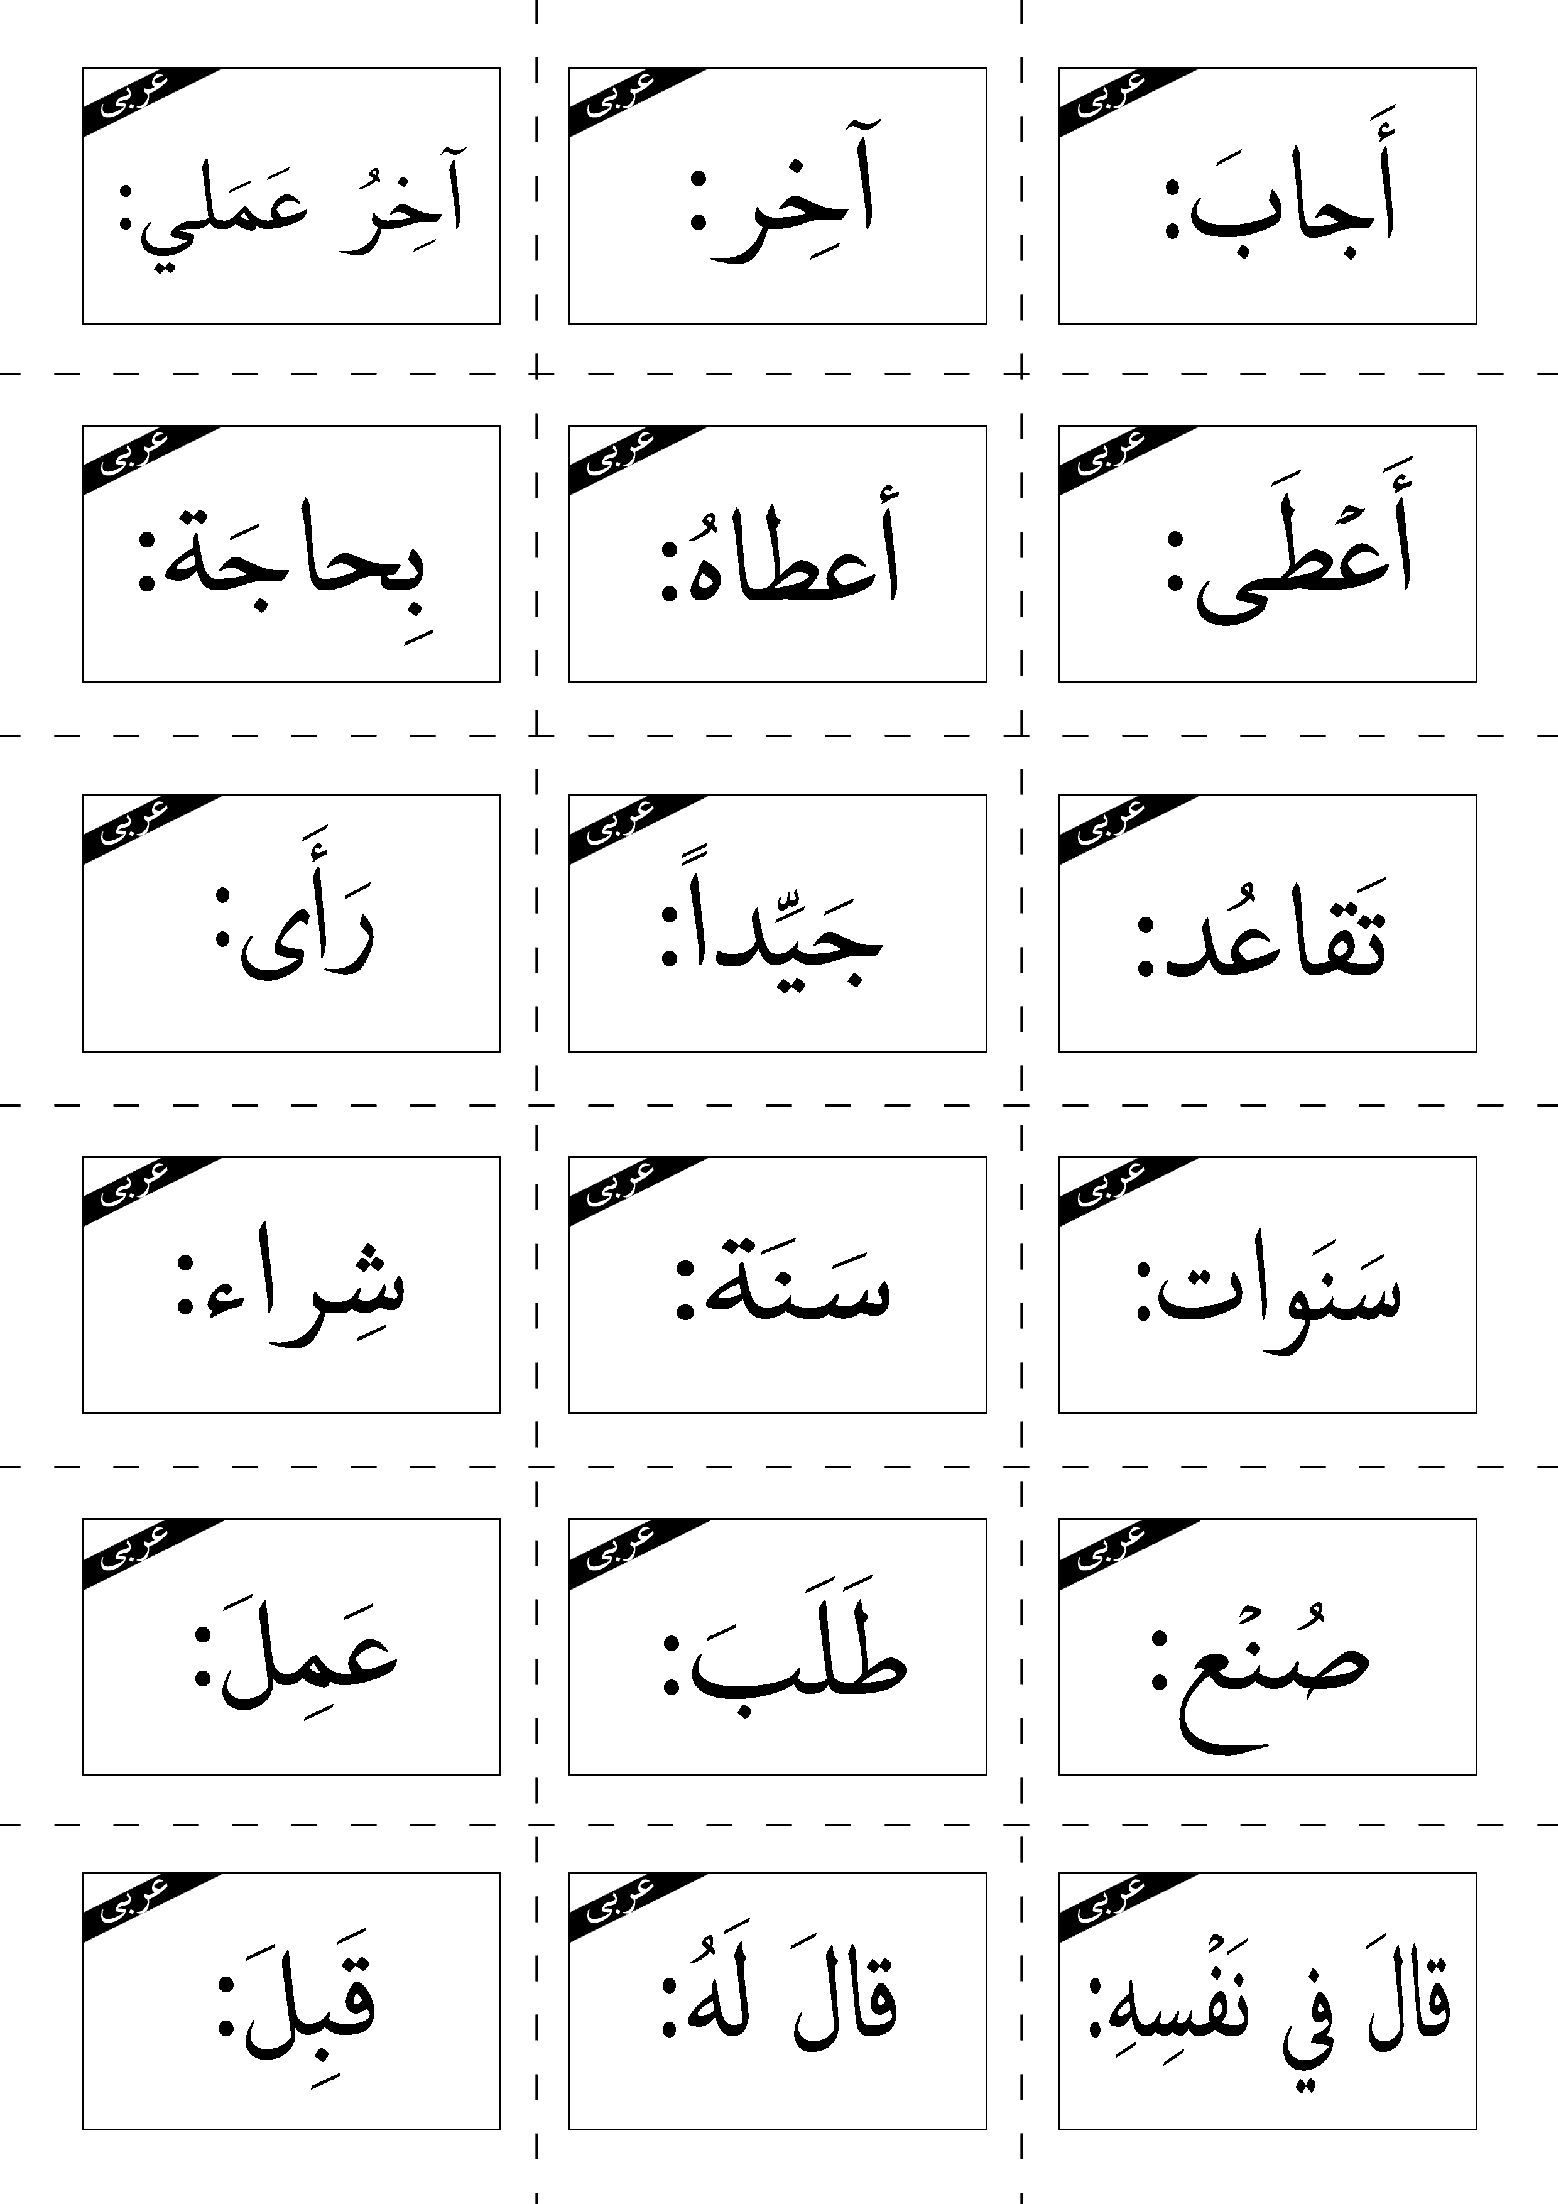  فلش کارت‌های لغات درس یازدهم عربی هفتم | درس 11: الْاخْلاصُ في الْعَمَل